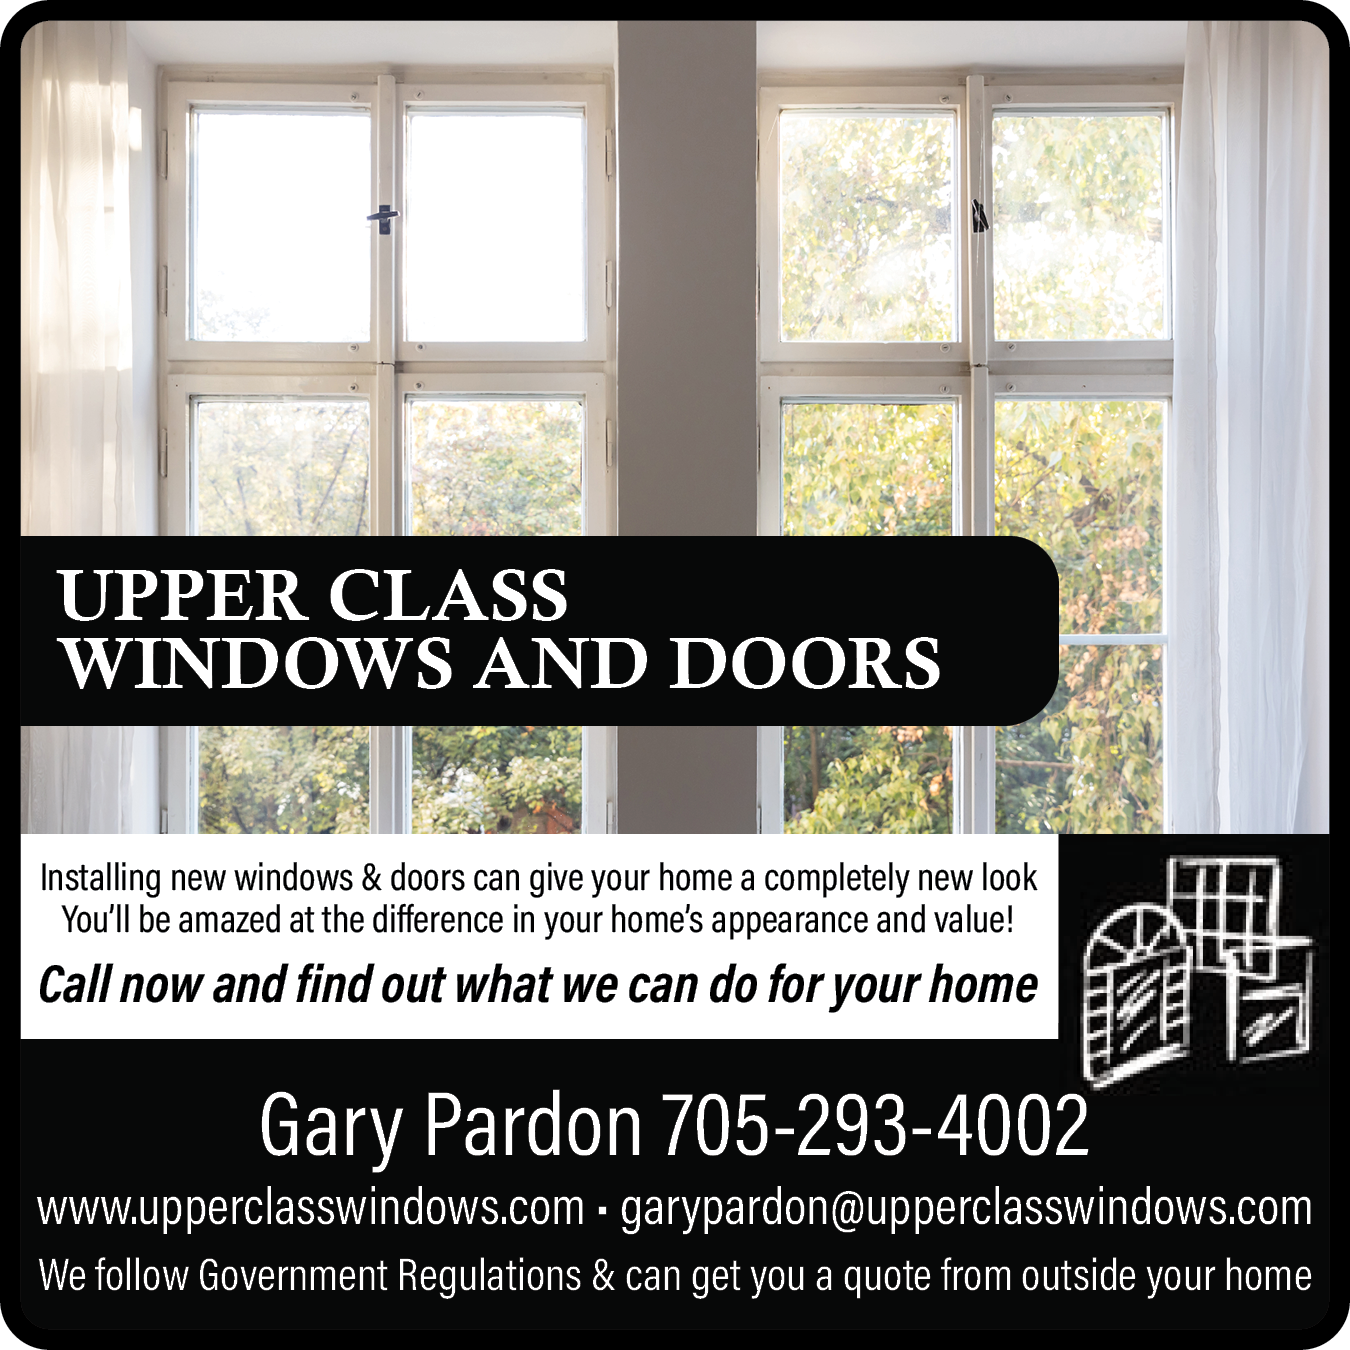 Upper Class Windows and Doors